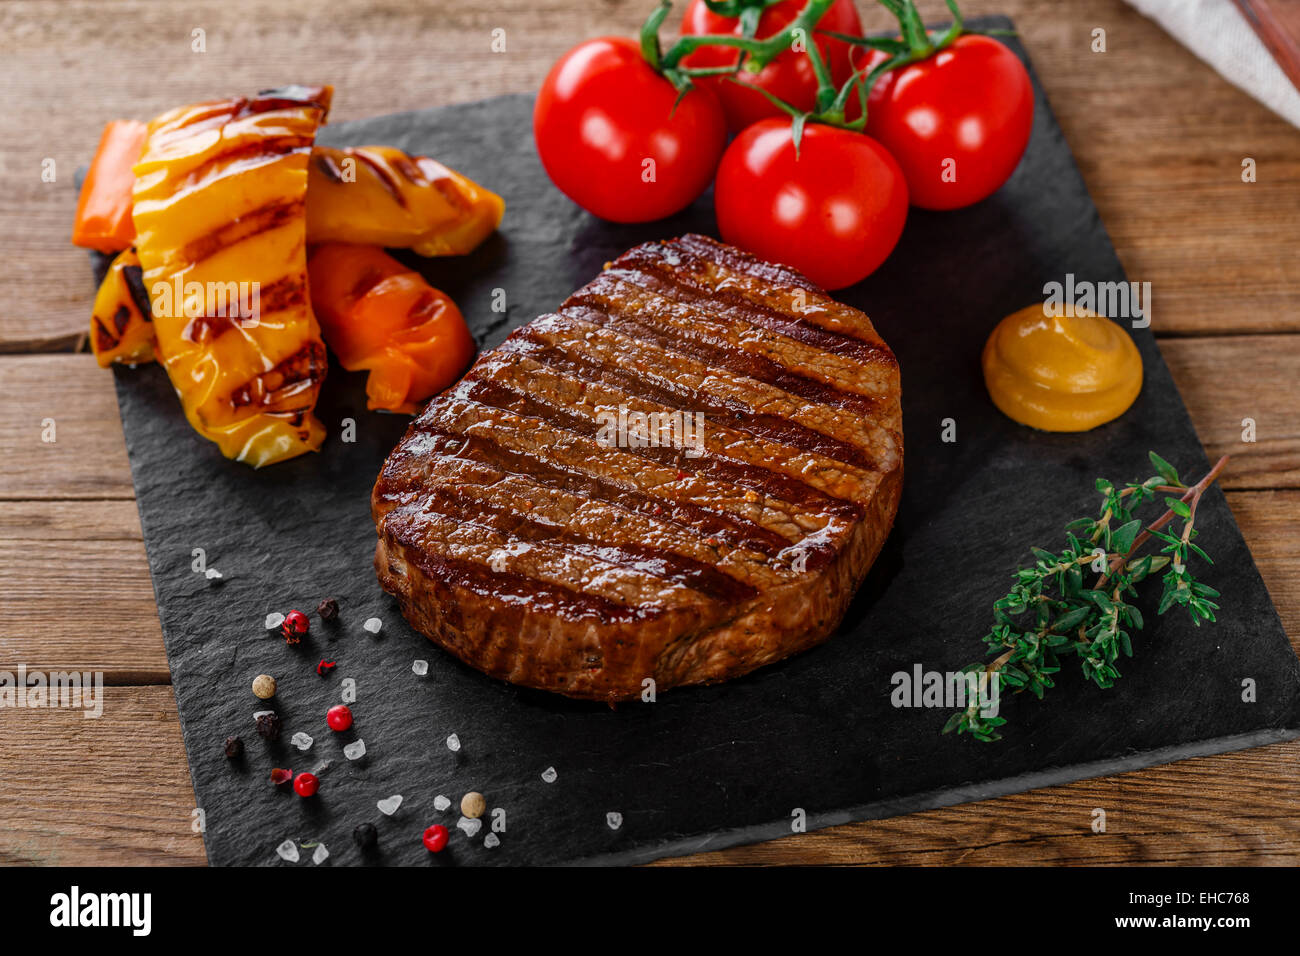 Grigliate di carne di manzo con verdure su una superficie in legno Foto Stock